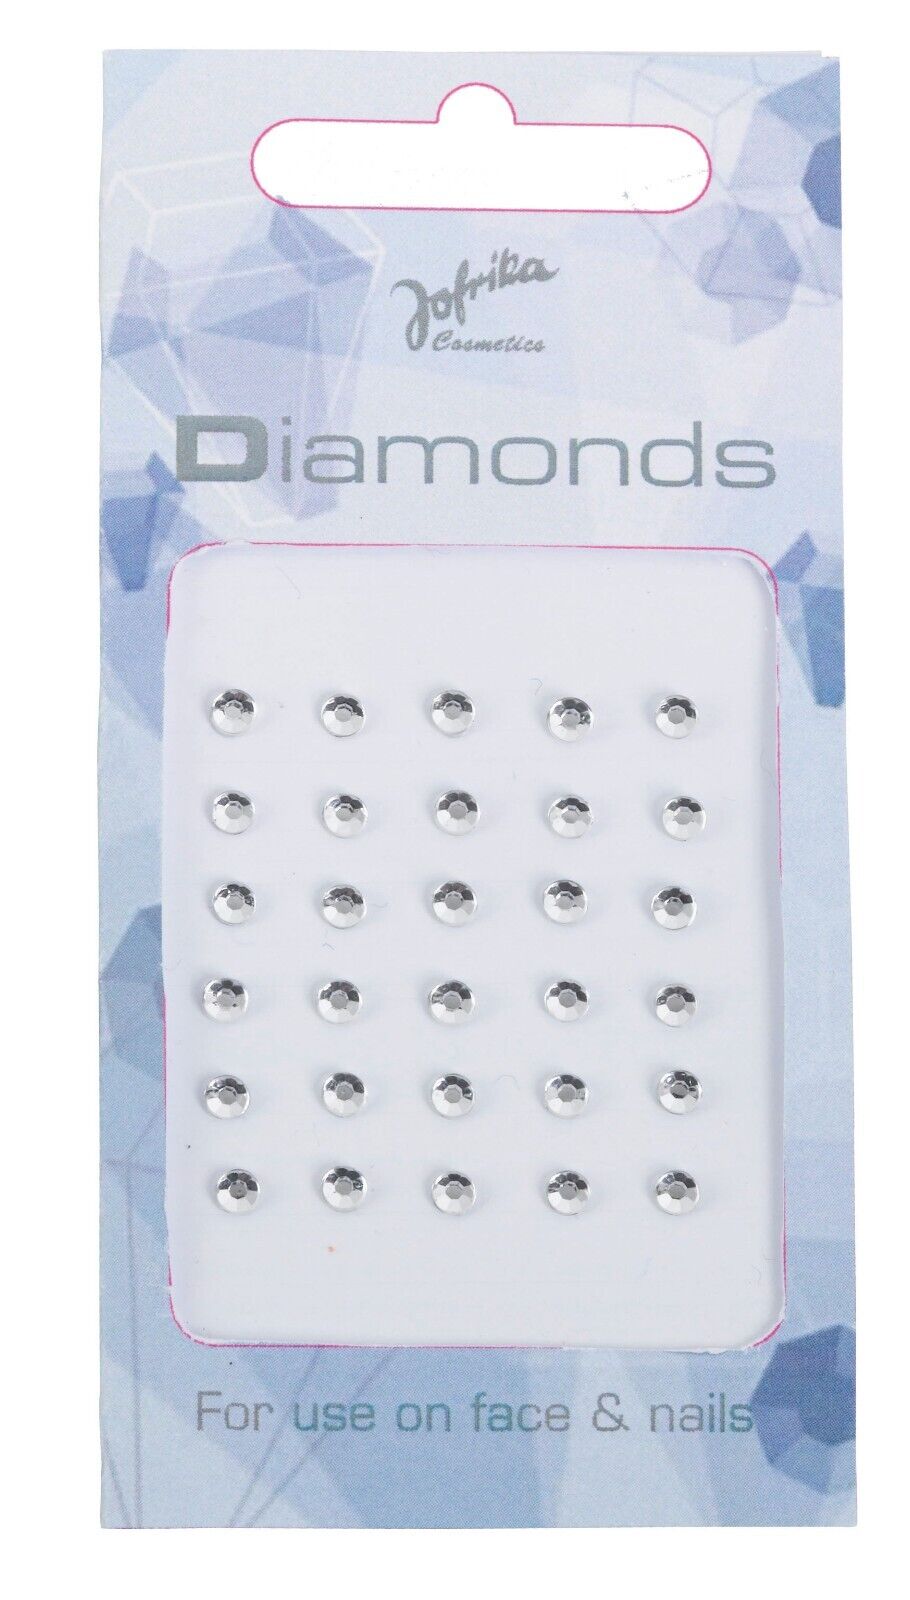 Jofrika Cosmetics 713250 - Diamonds Crystal, Selbstklebende runde Steinchen